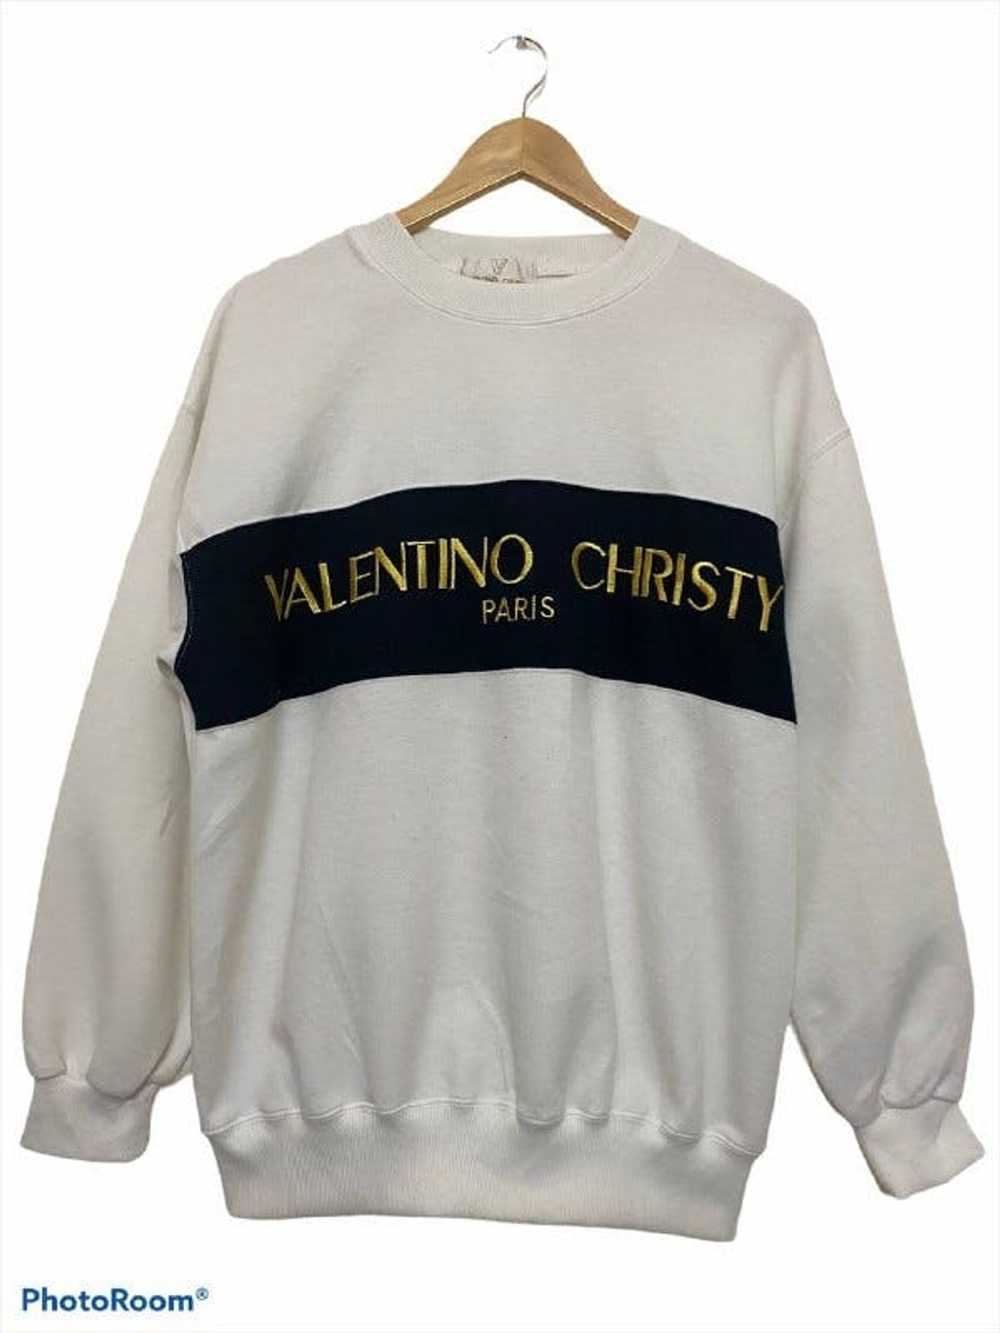 Valentino Vintage VALENTINO CHRISTY Paris sweatsh… - image 1